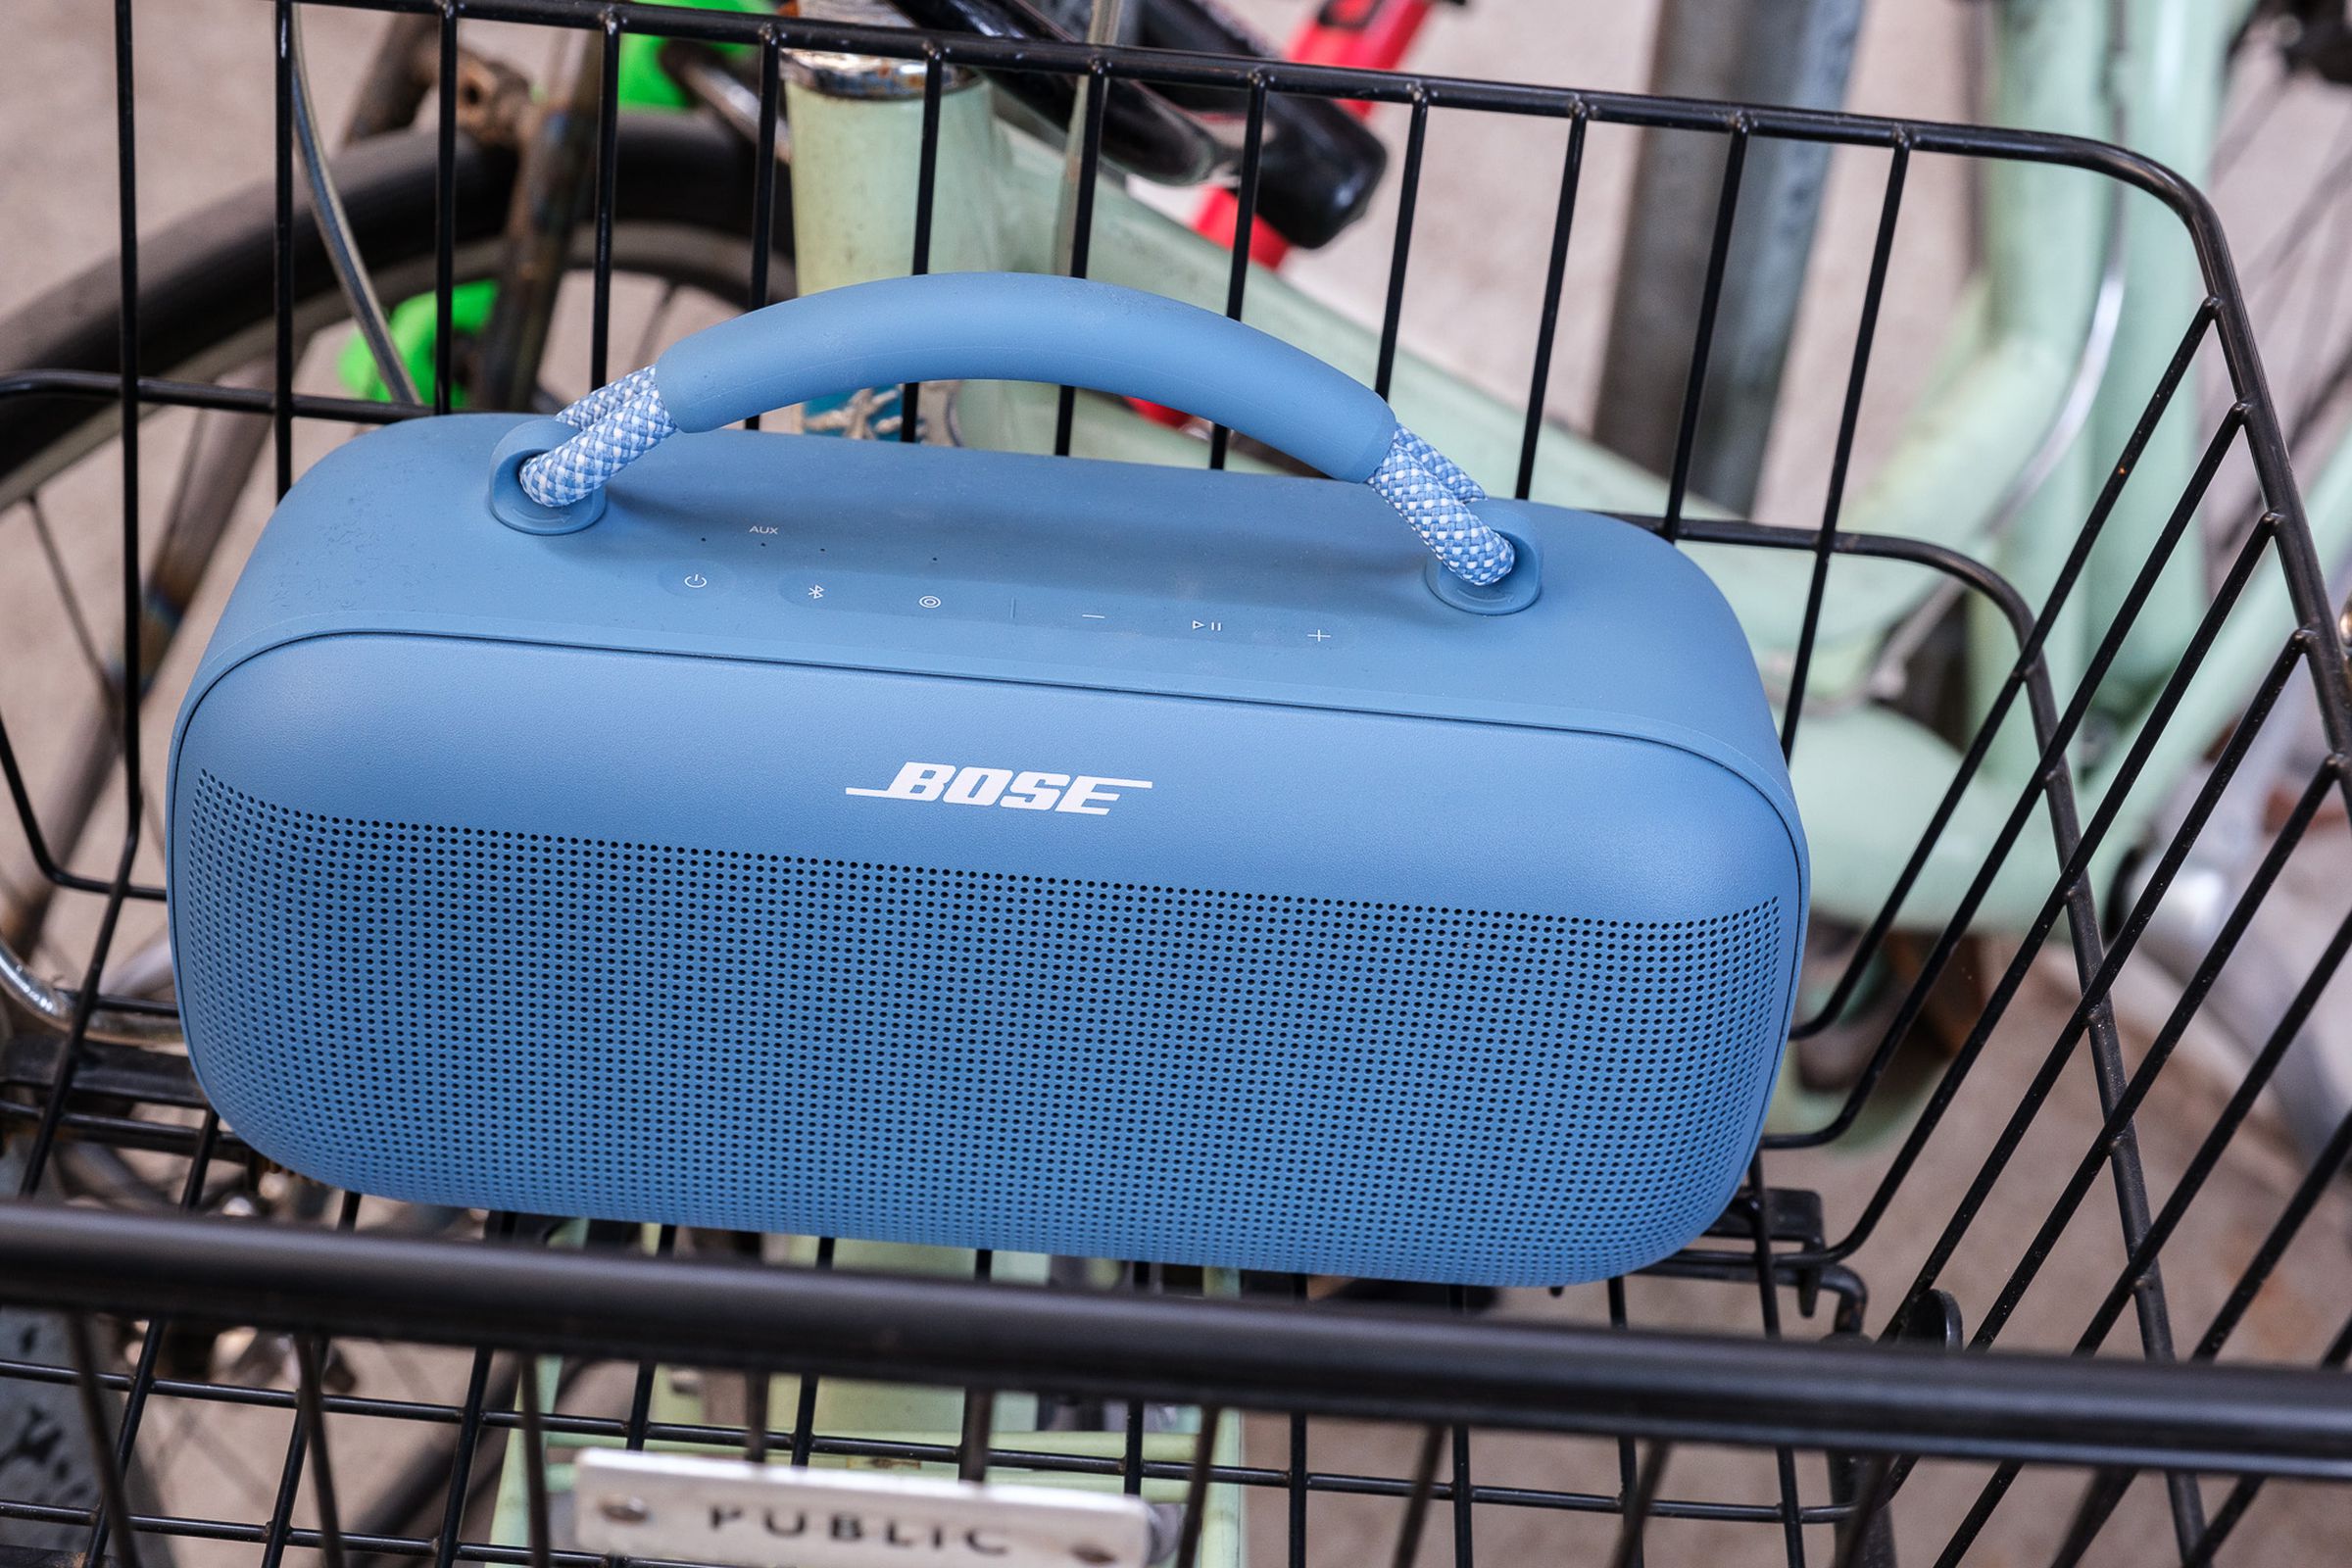 A photo of Bose’s light blue SoundLink Max portable speaker.